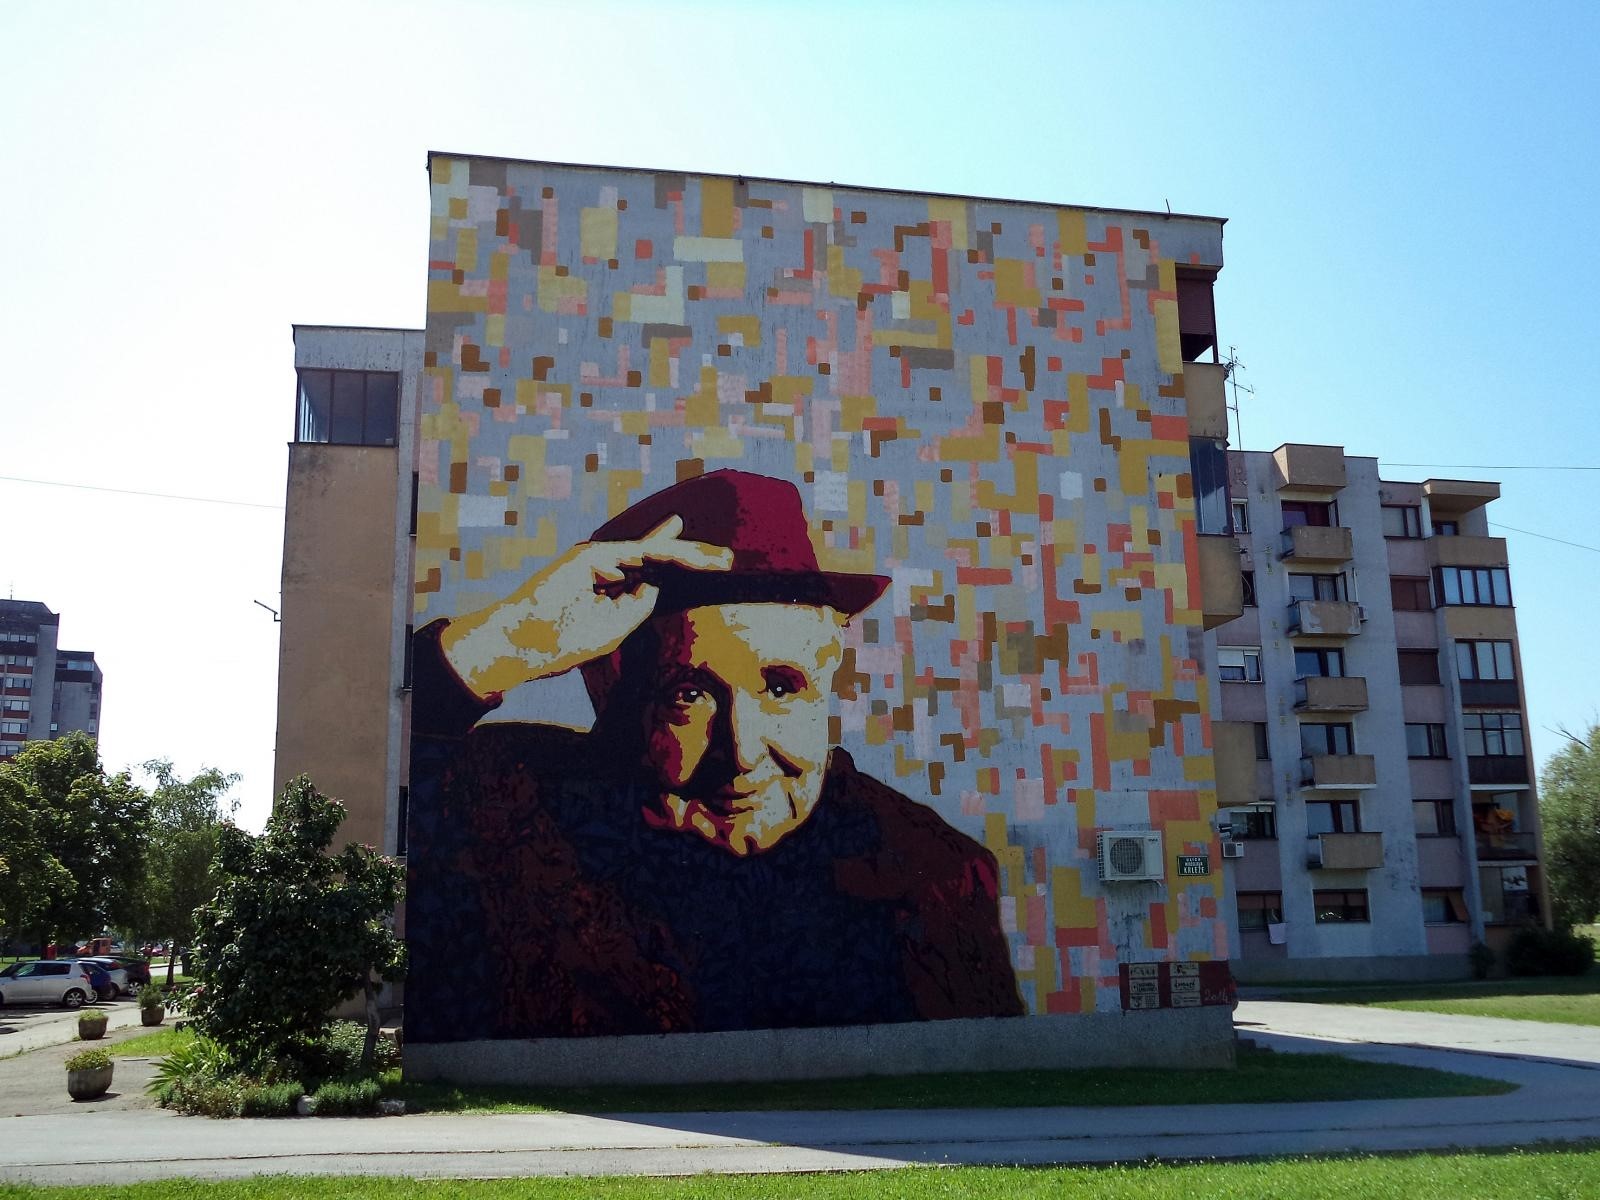 16.07.2014., Karlovac - U sklopu projekta Pouka u Krlezinoj ulici na zgradi je napravljen veliki mural Miroslava Krleze.
Dominik Grguric/PIXSELL